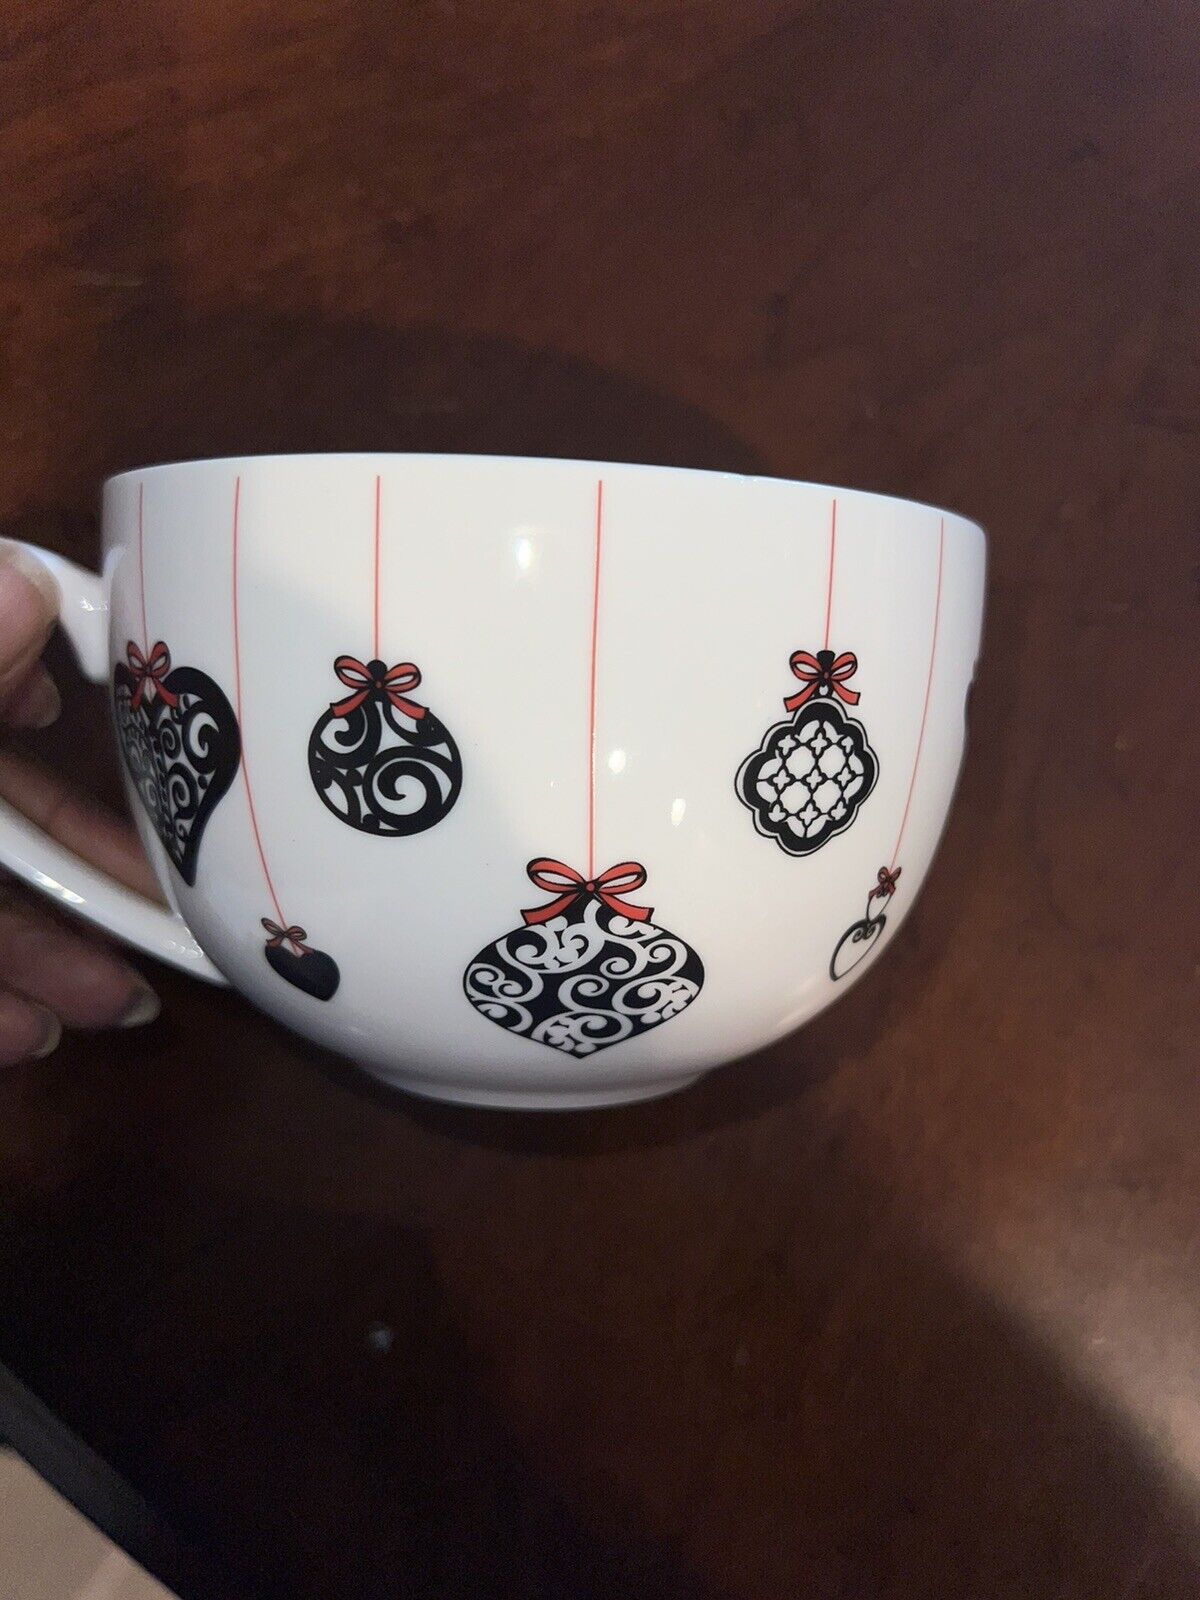 Brighton Christmas Mug 2014 Love Notes Coffee Cup Holiday Gift Ornament Design  